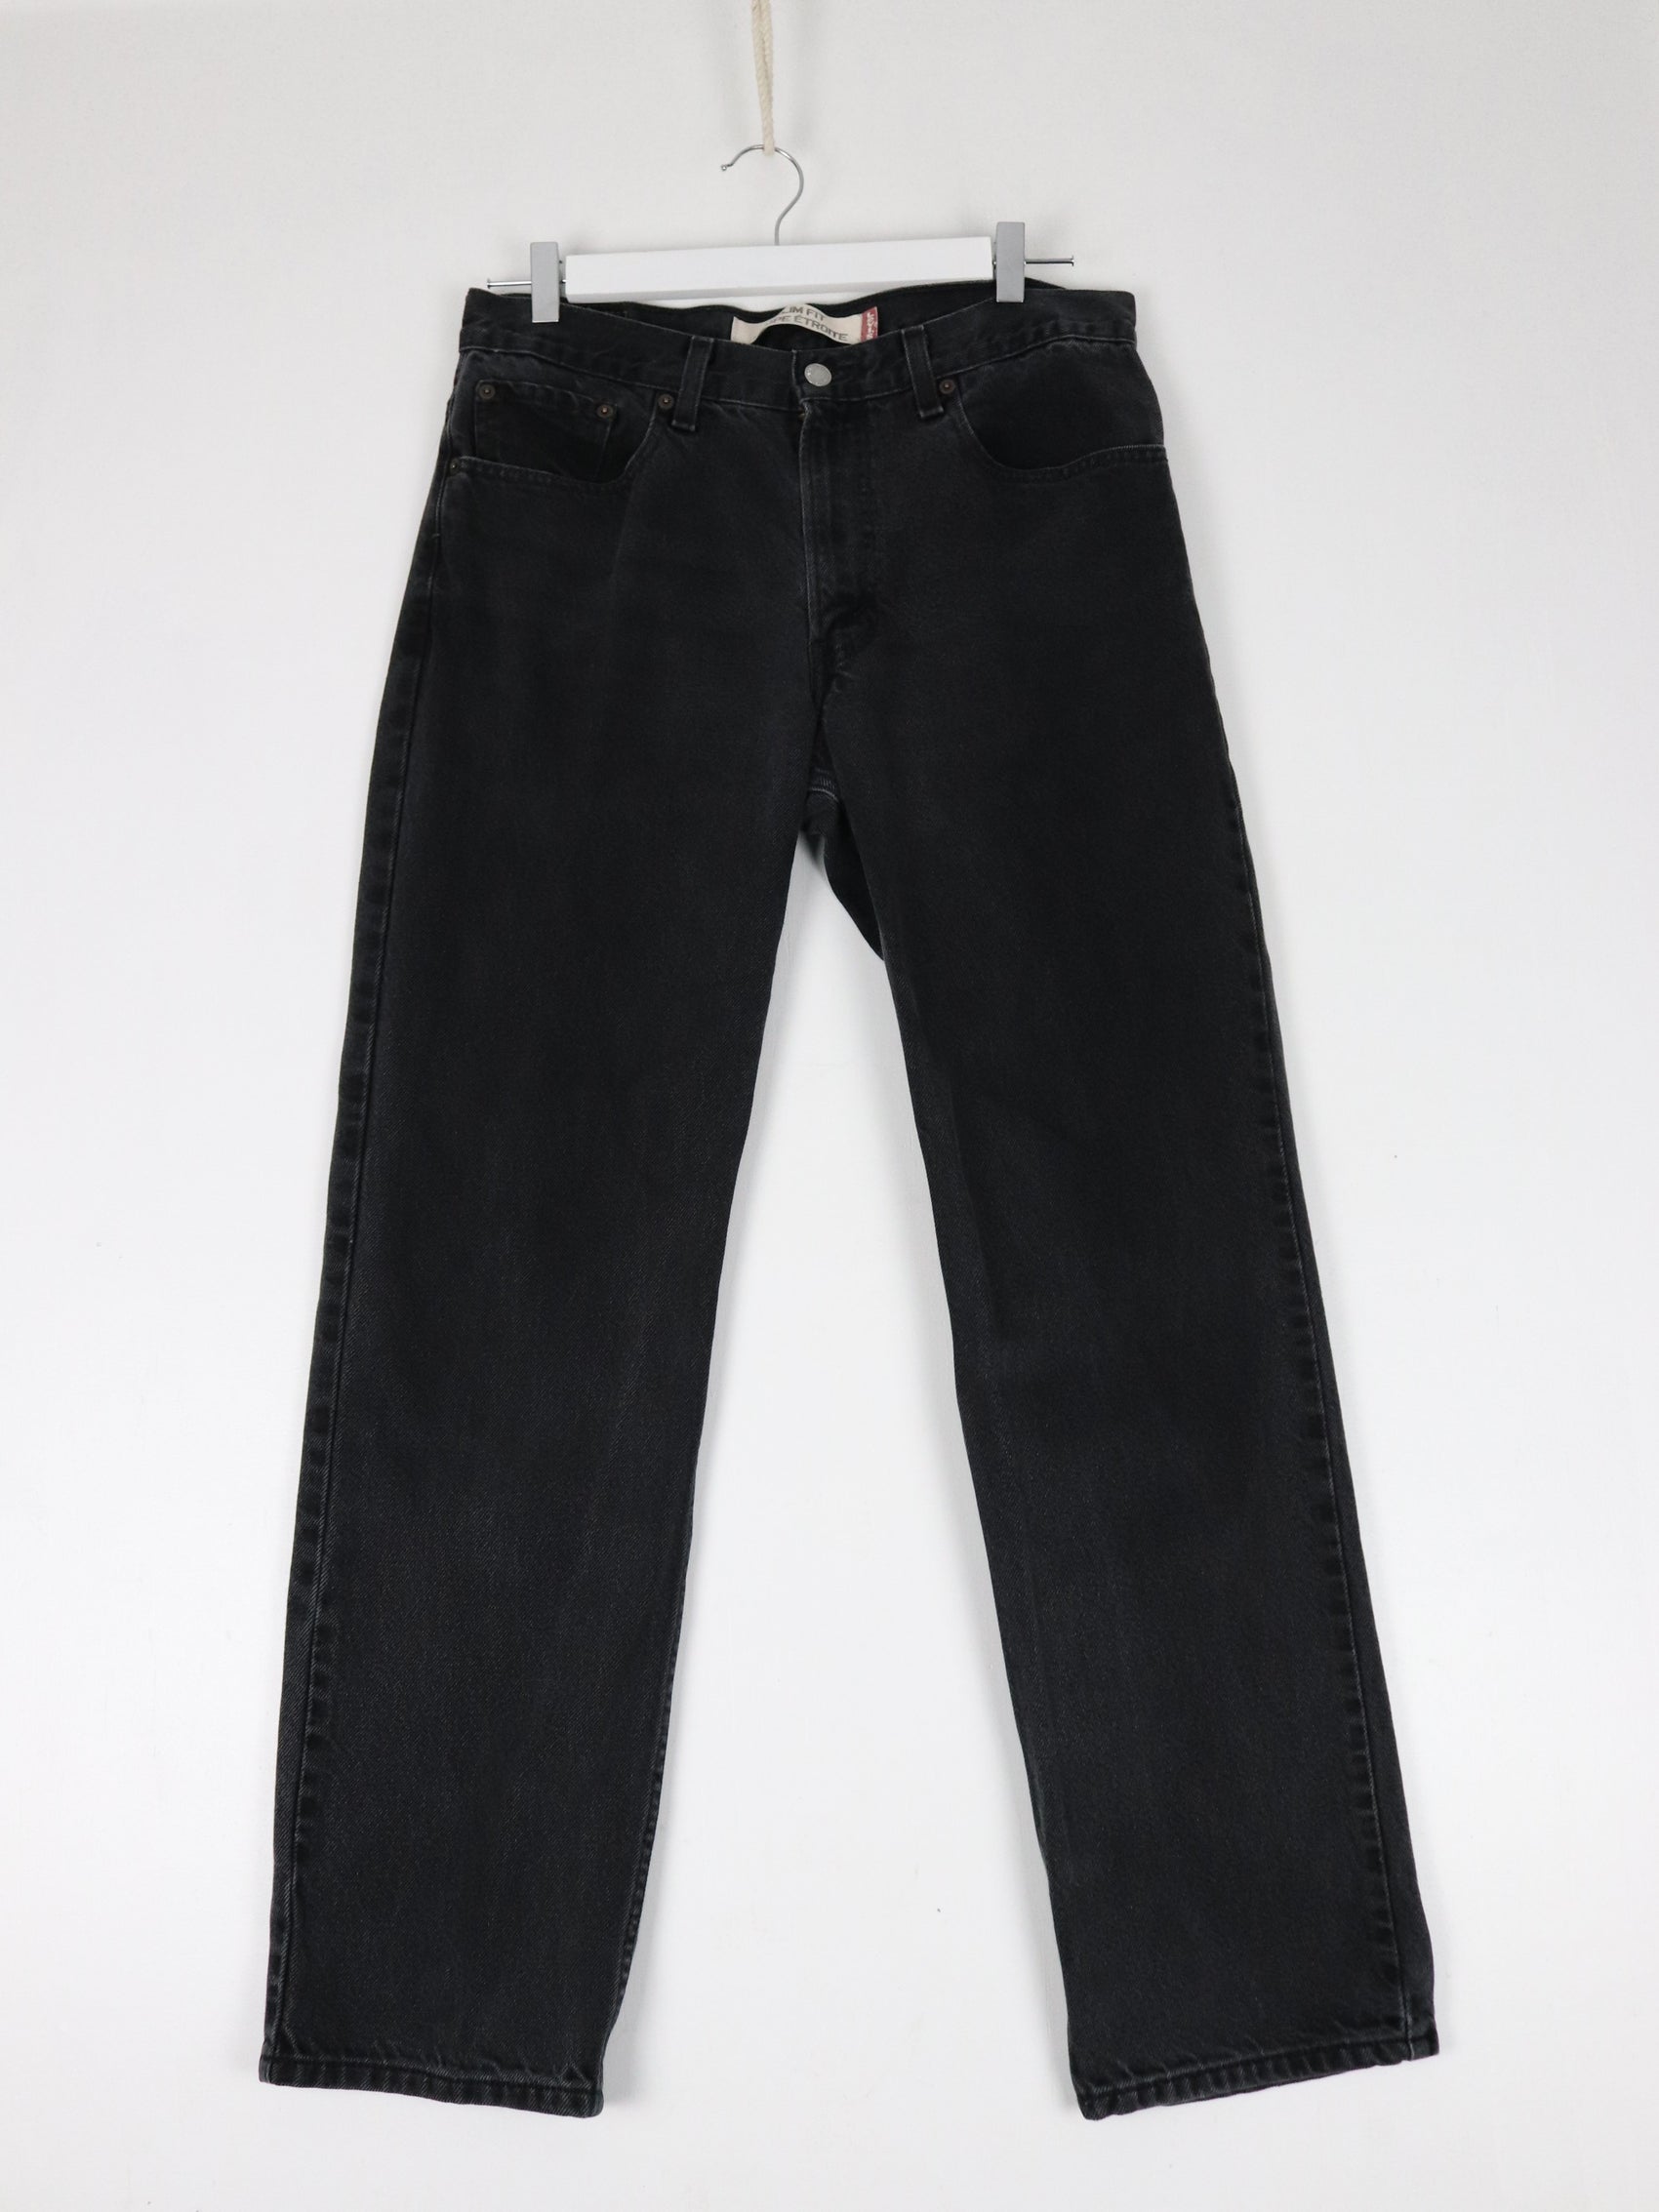 Levi's Pants Fits Mens 32 x 30 Black Denim Jeans Slim Fit